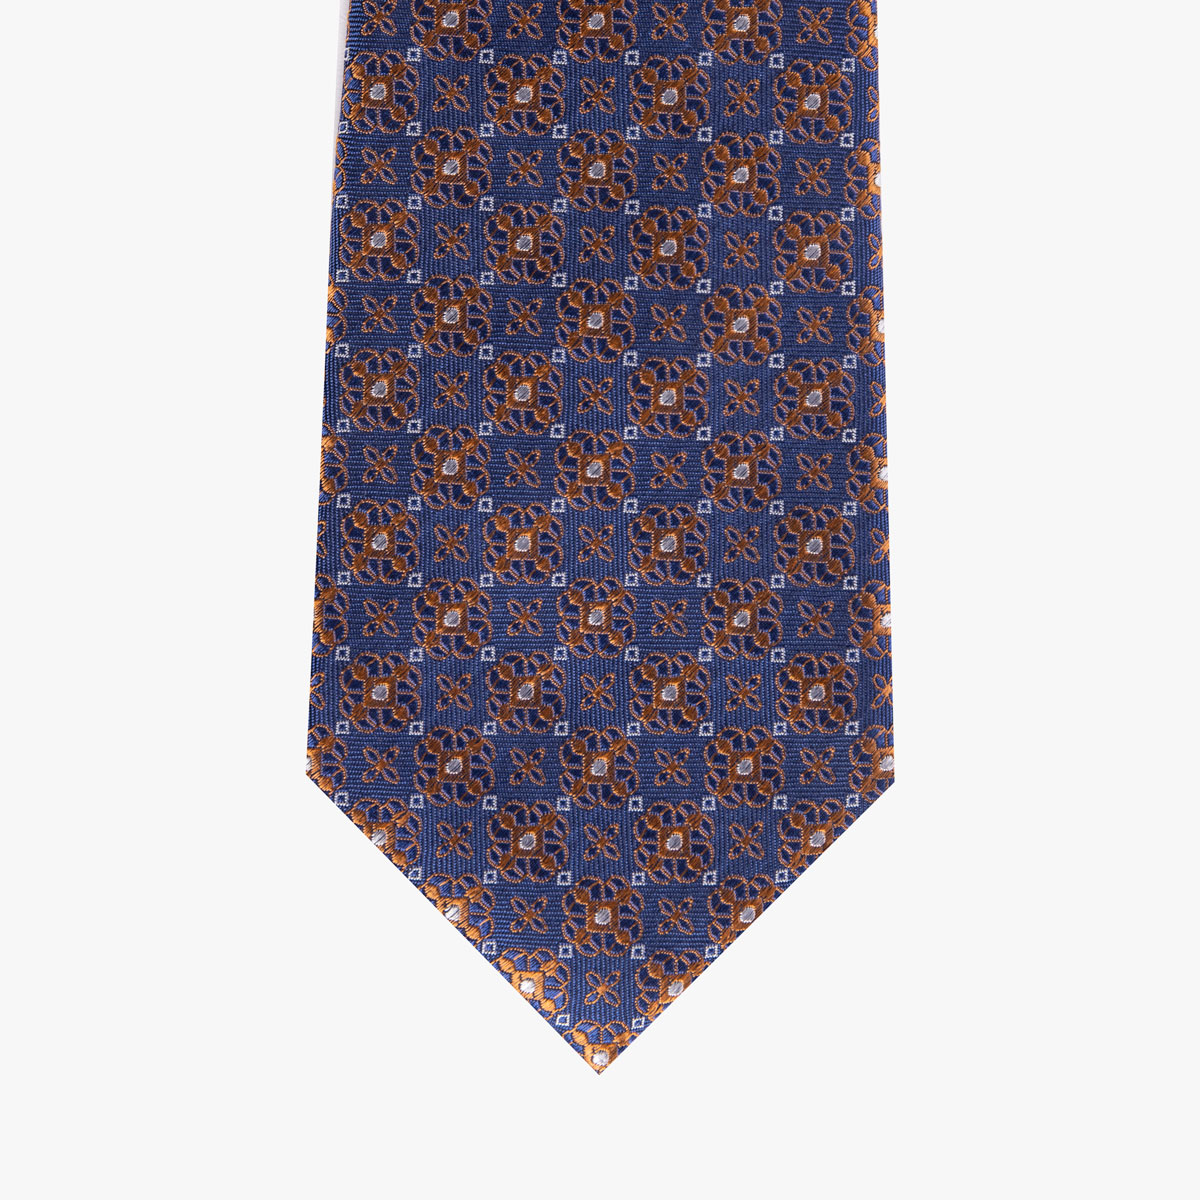 Krawatte aus Seide in dunkelblau/orange